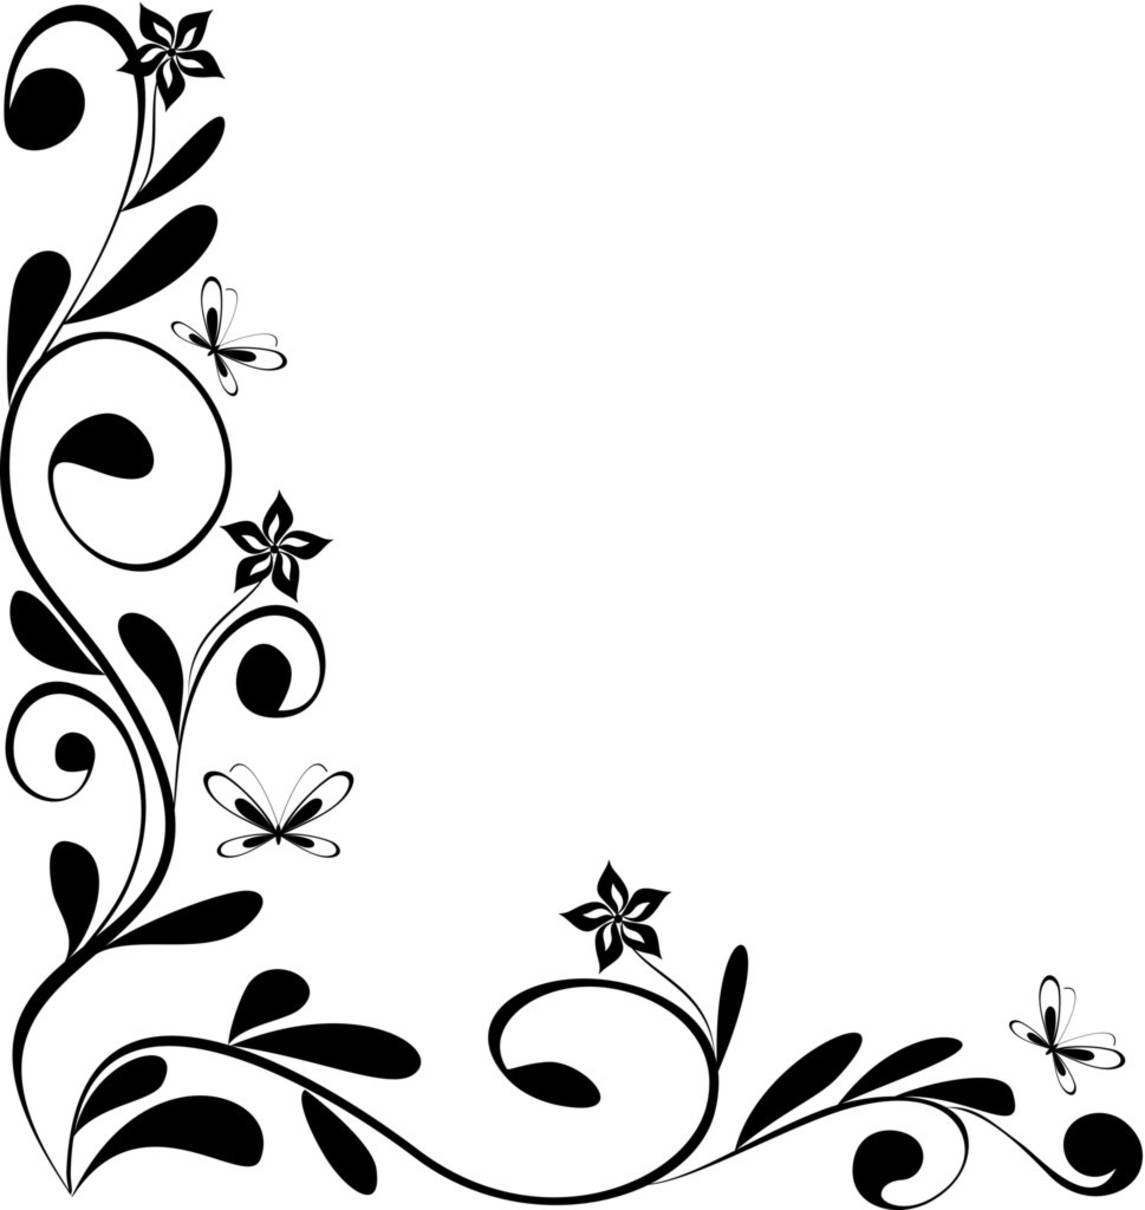 Flower Border Line Design | Free Download Clip Art | Free Clip Art ...